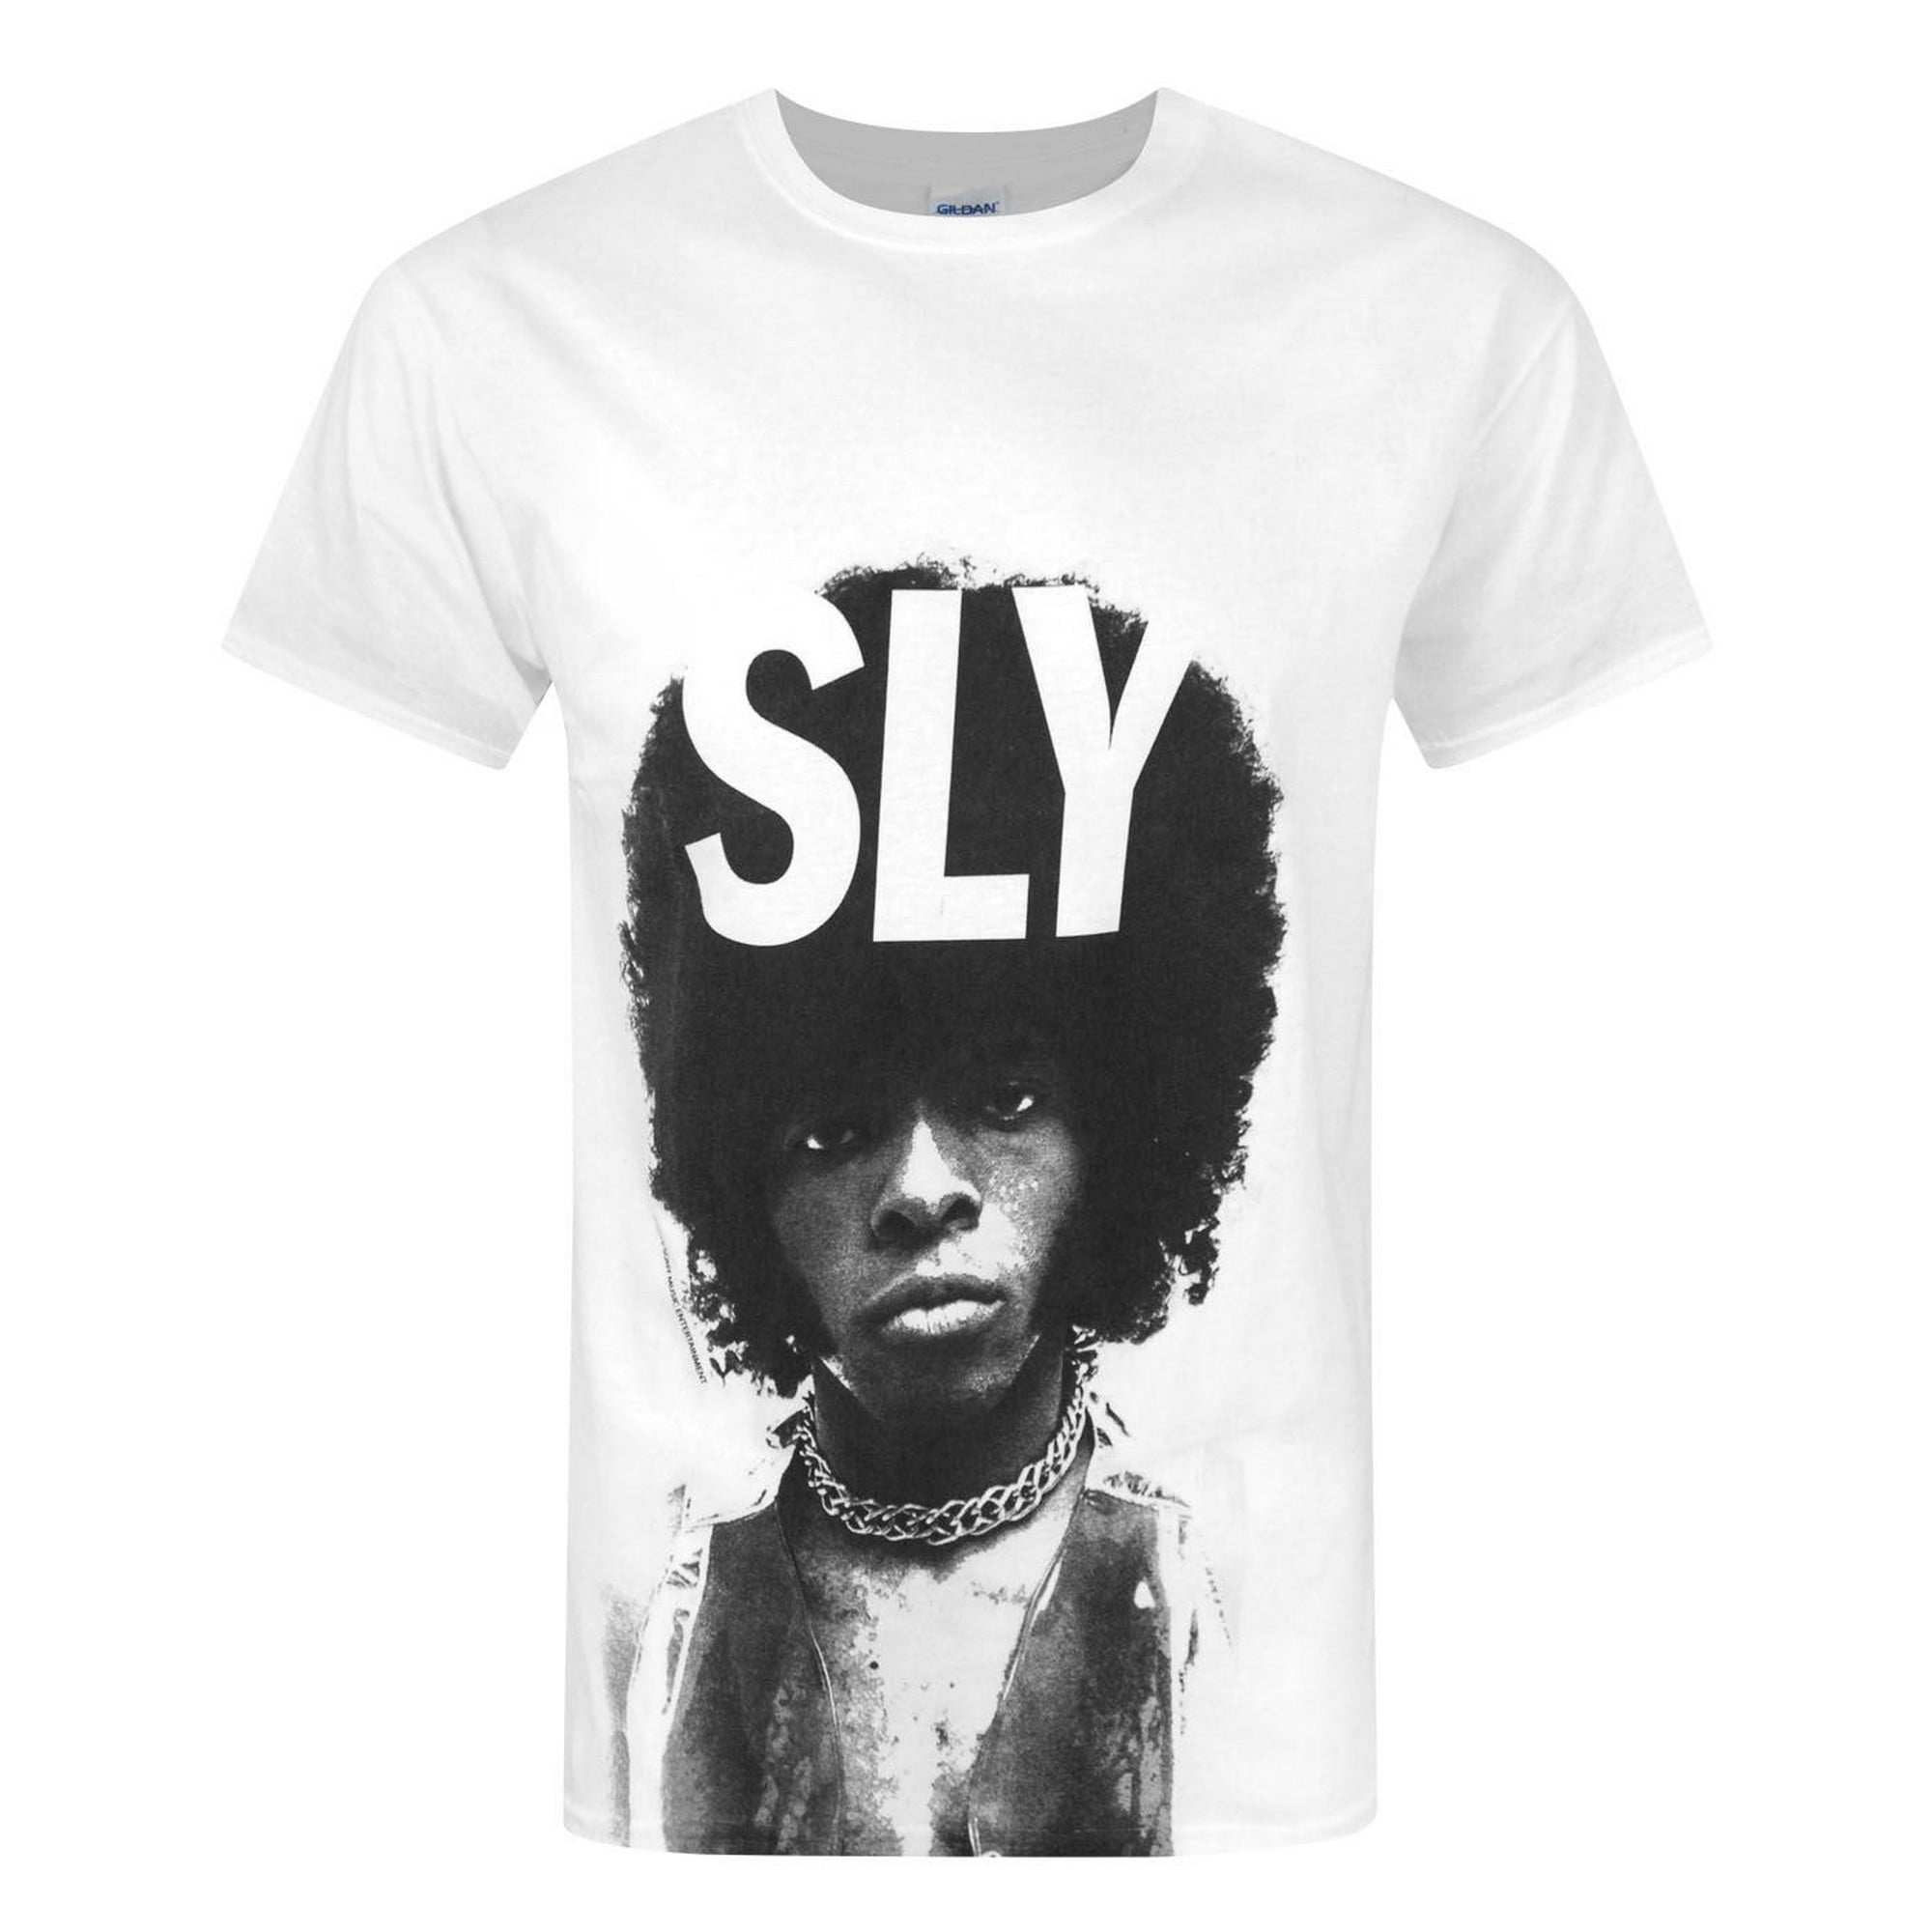 Sly Stone Portrait T-Shirt - Walmart.com